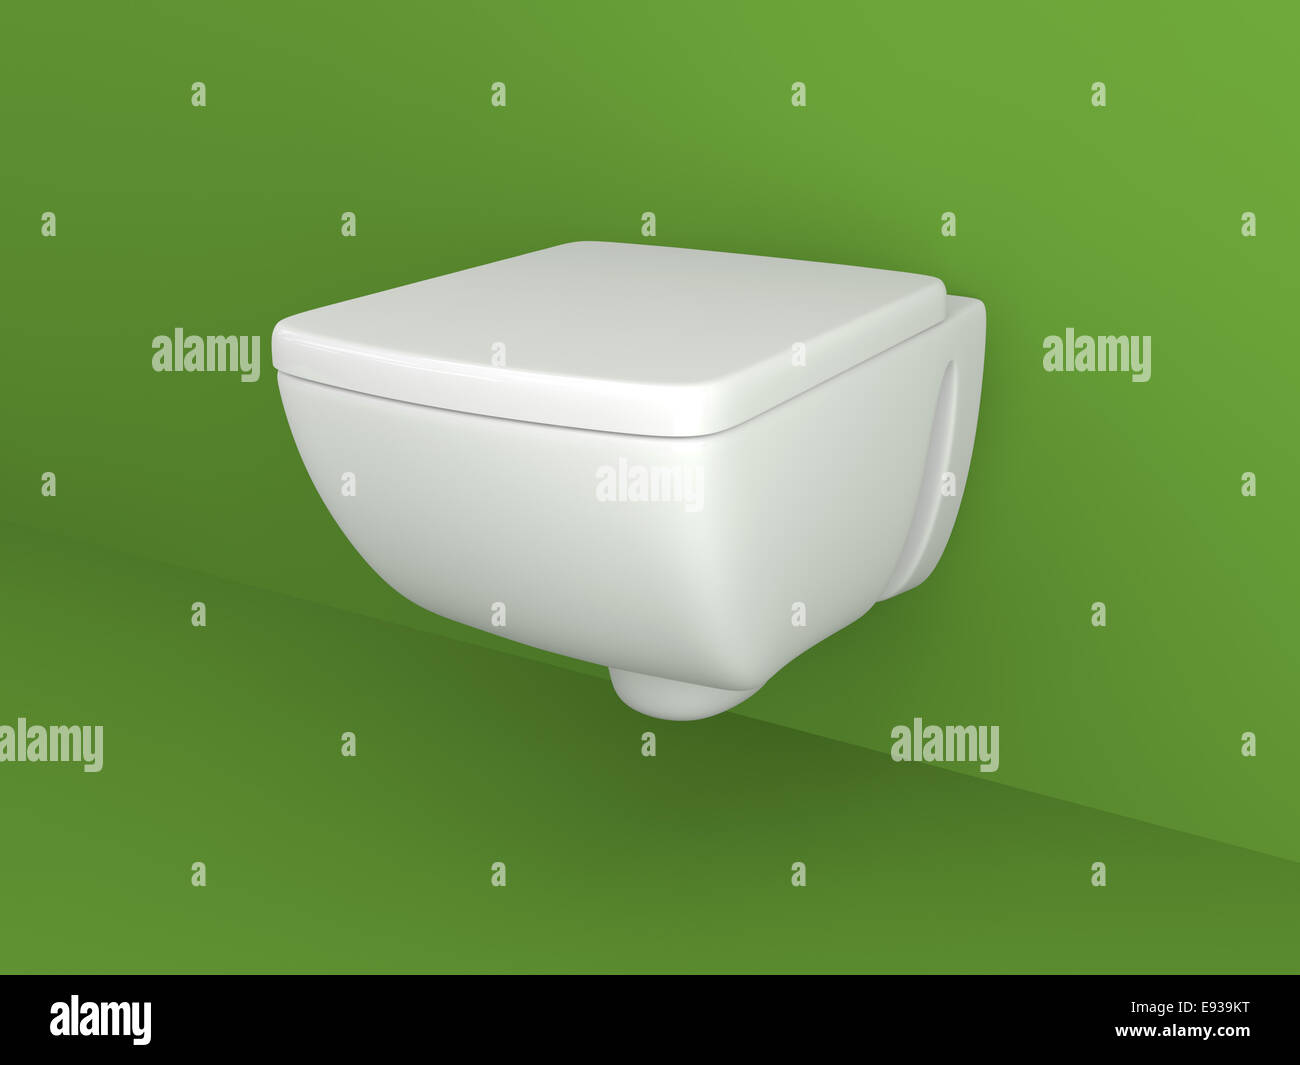 Toilet appliance on green wall. Stock Photo